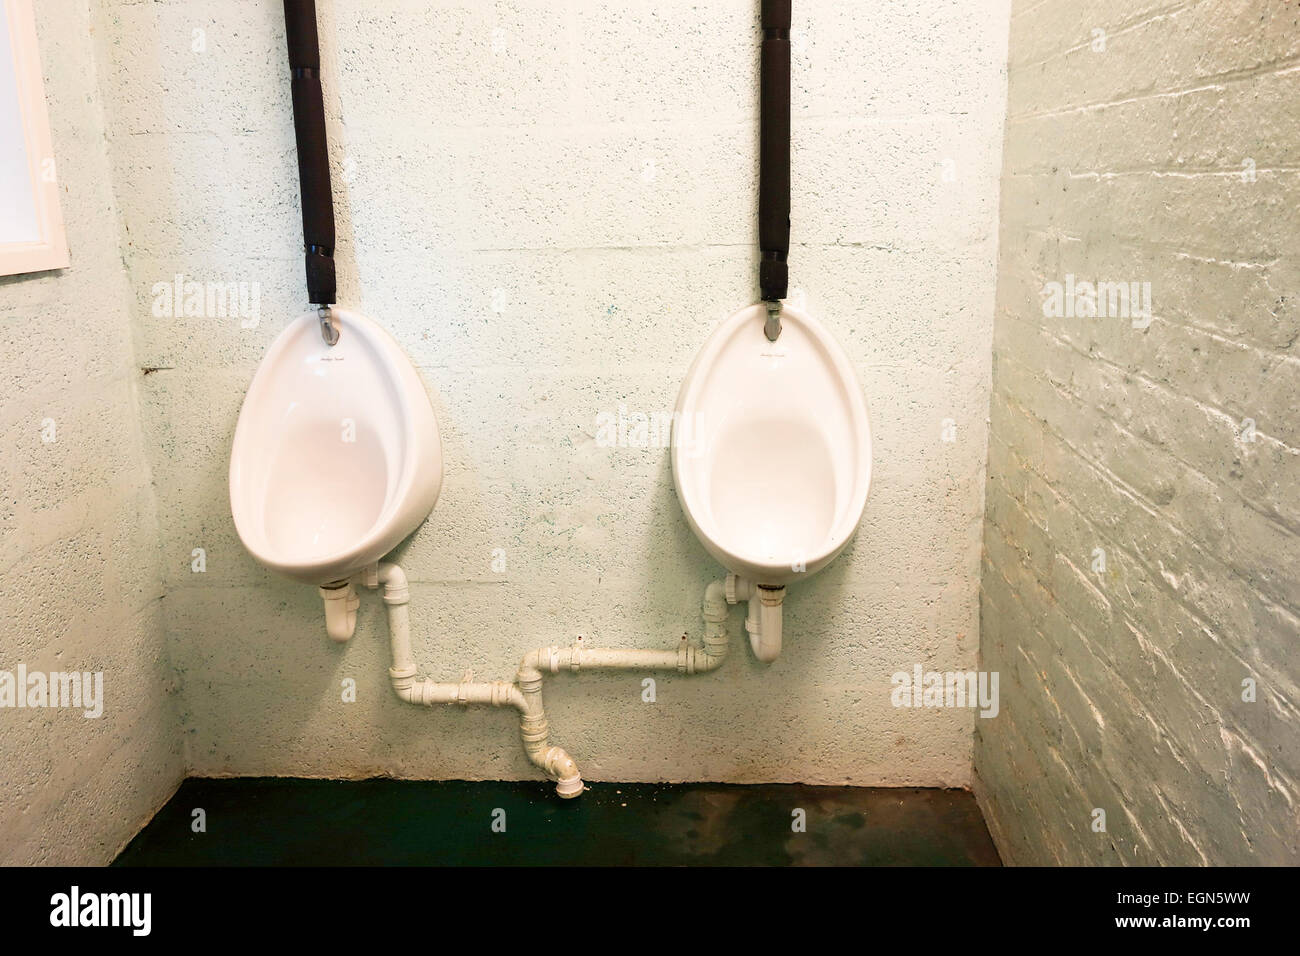 https://c8.alamy.com/comp/EGN5WW/two-urinals-in-a-public-toilet-EGN5WW.jpg